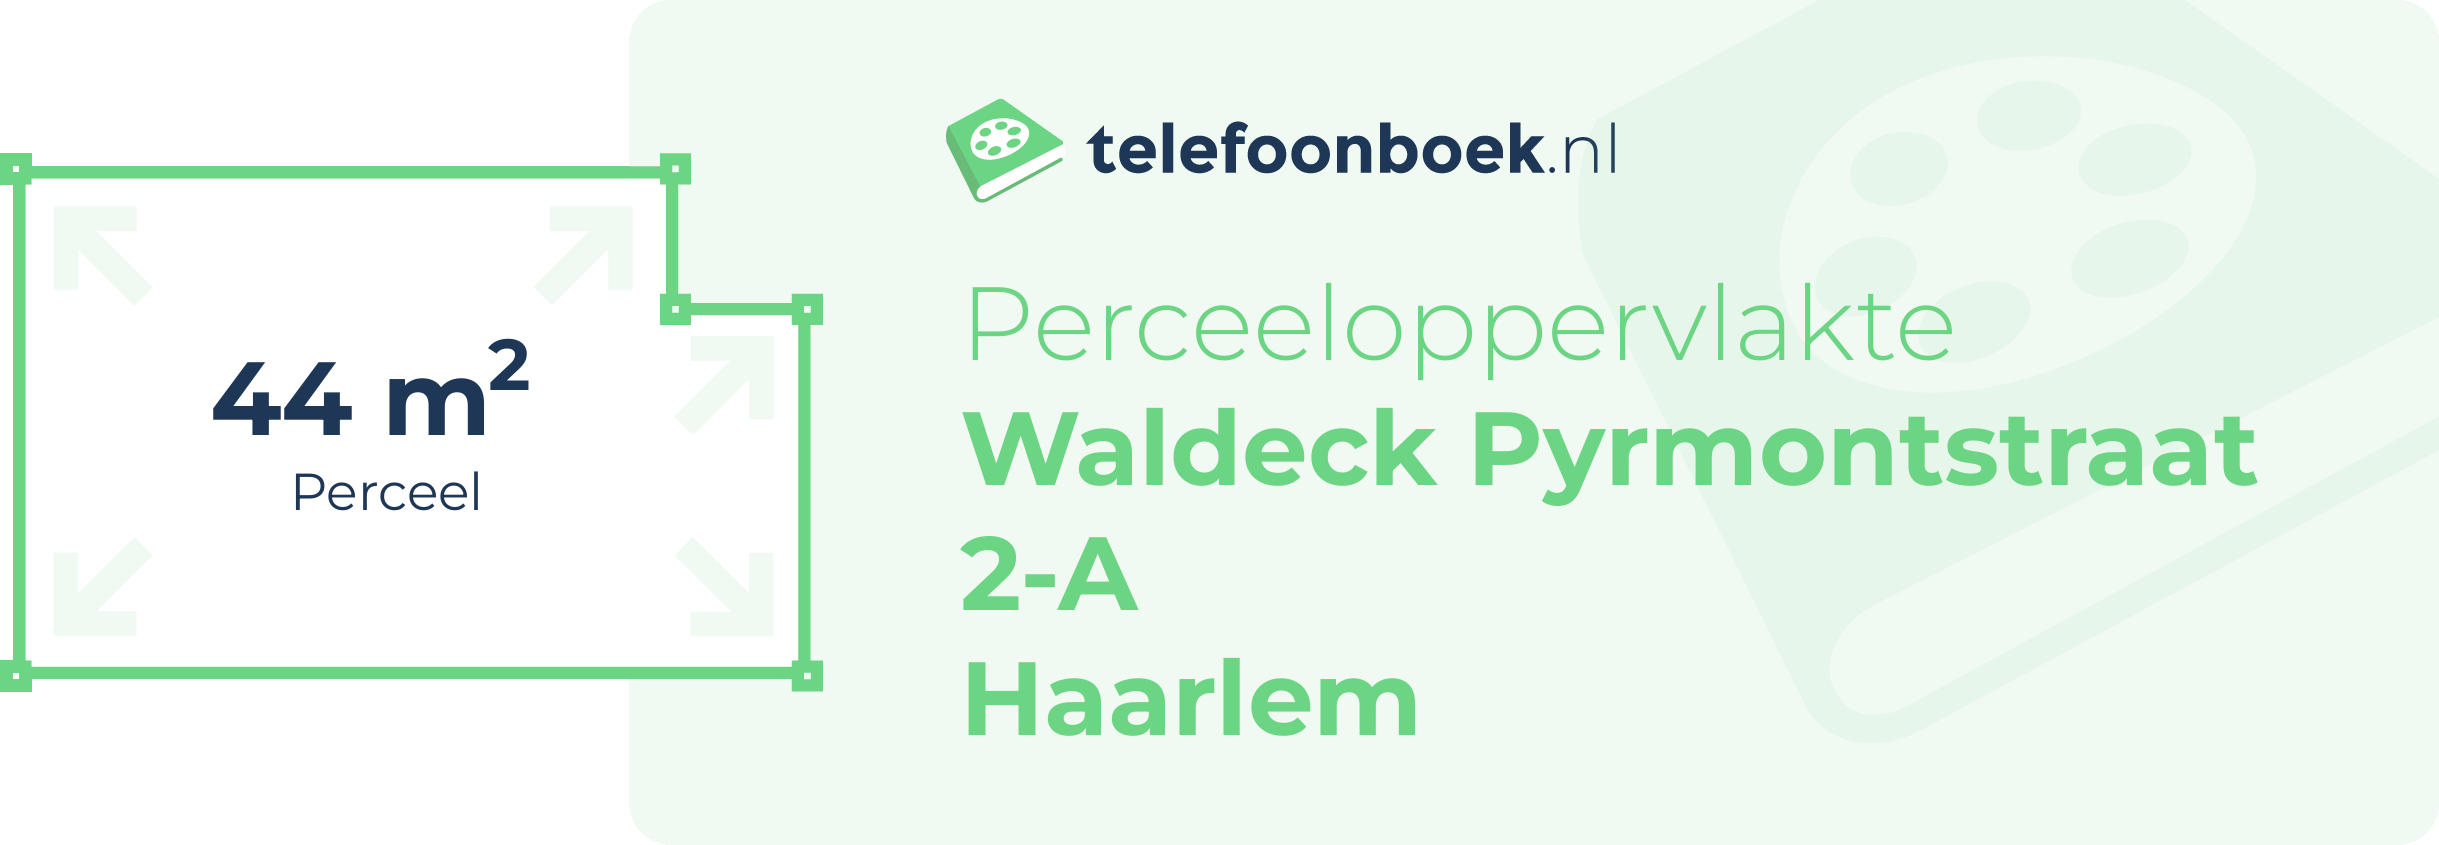 Perceeloppervlakte Waldeck Pyrmontstraat 2-A Haarlem